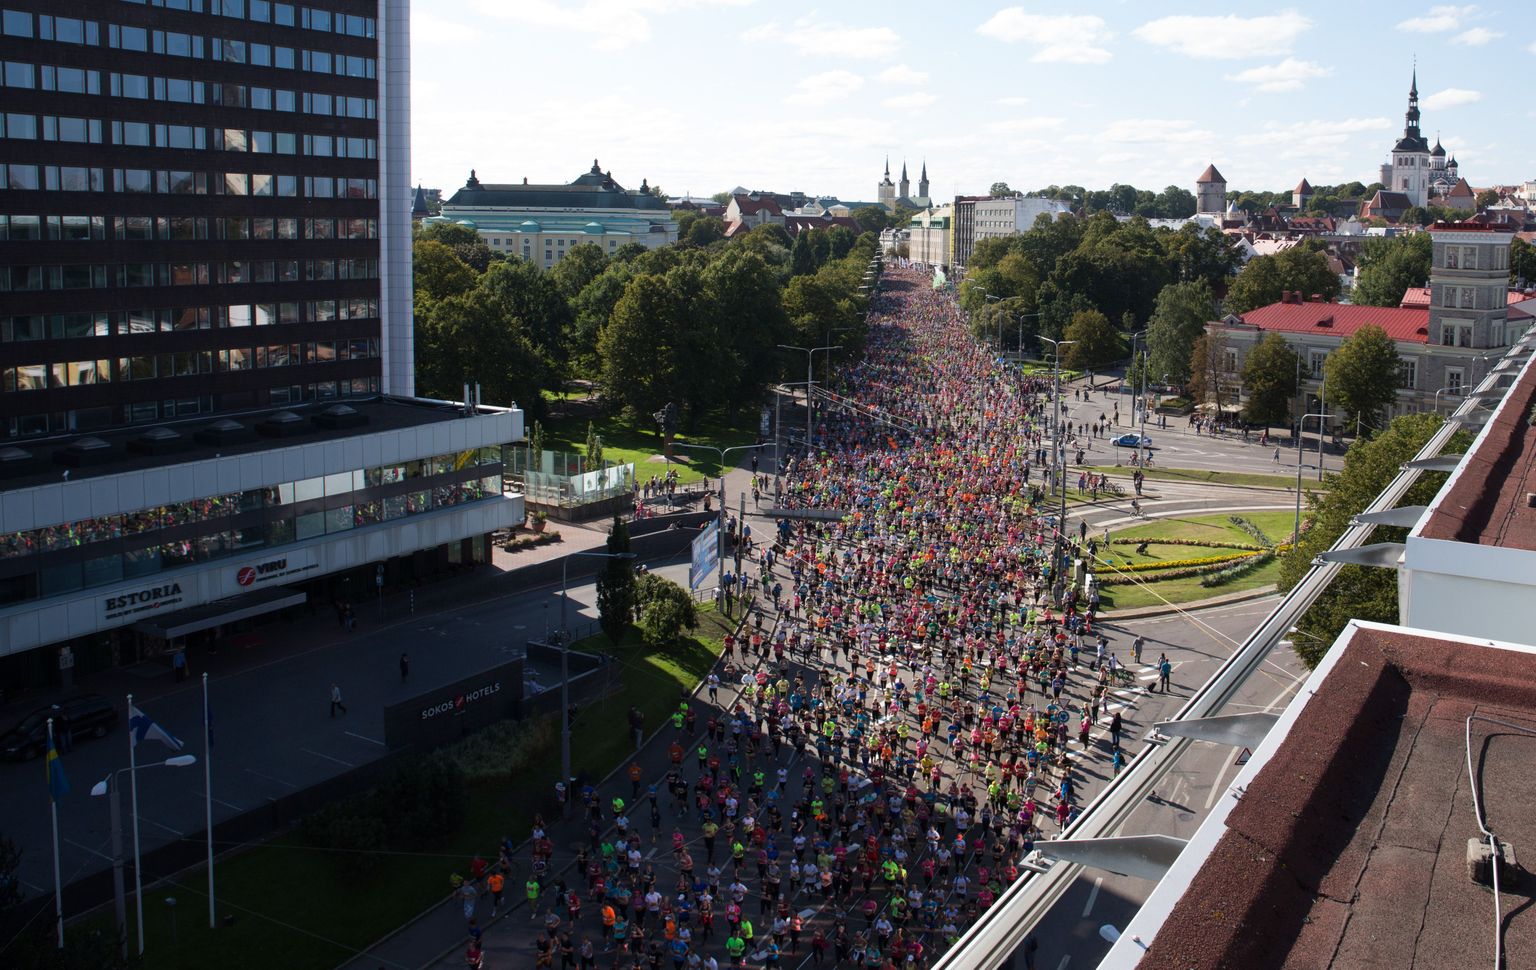 SEB Tallinna maraton 2015.